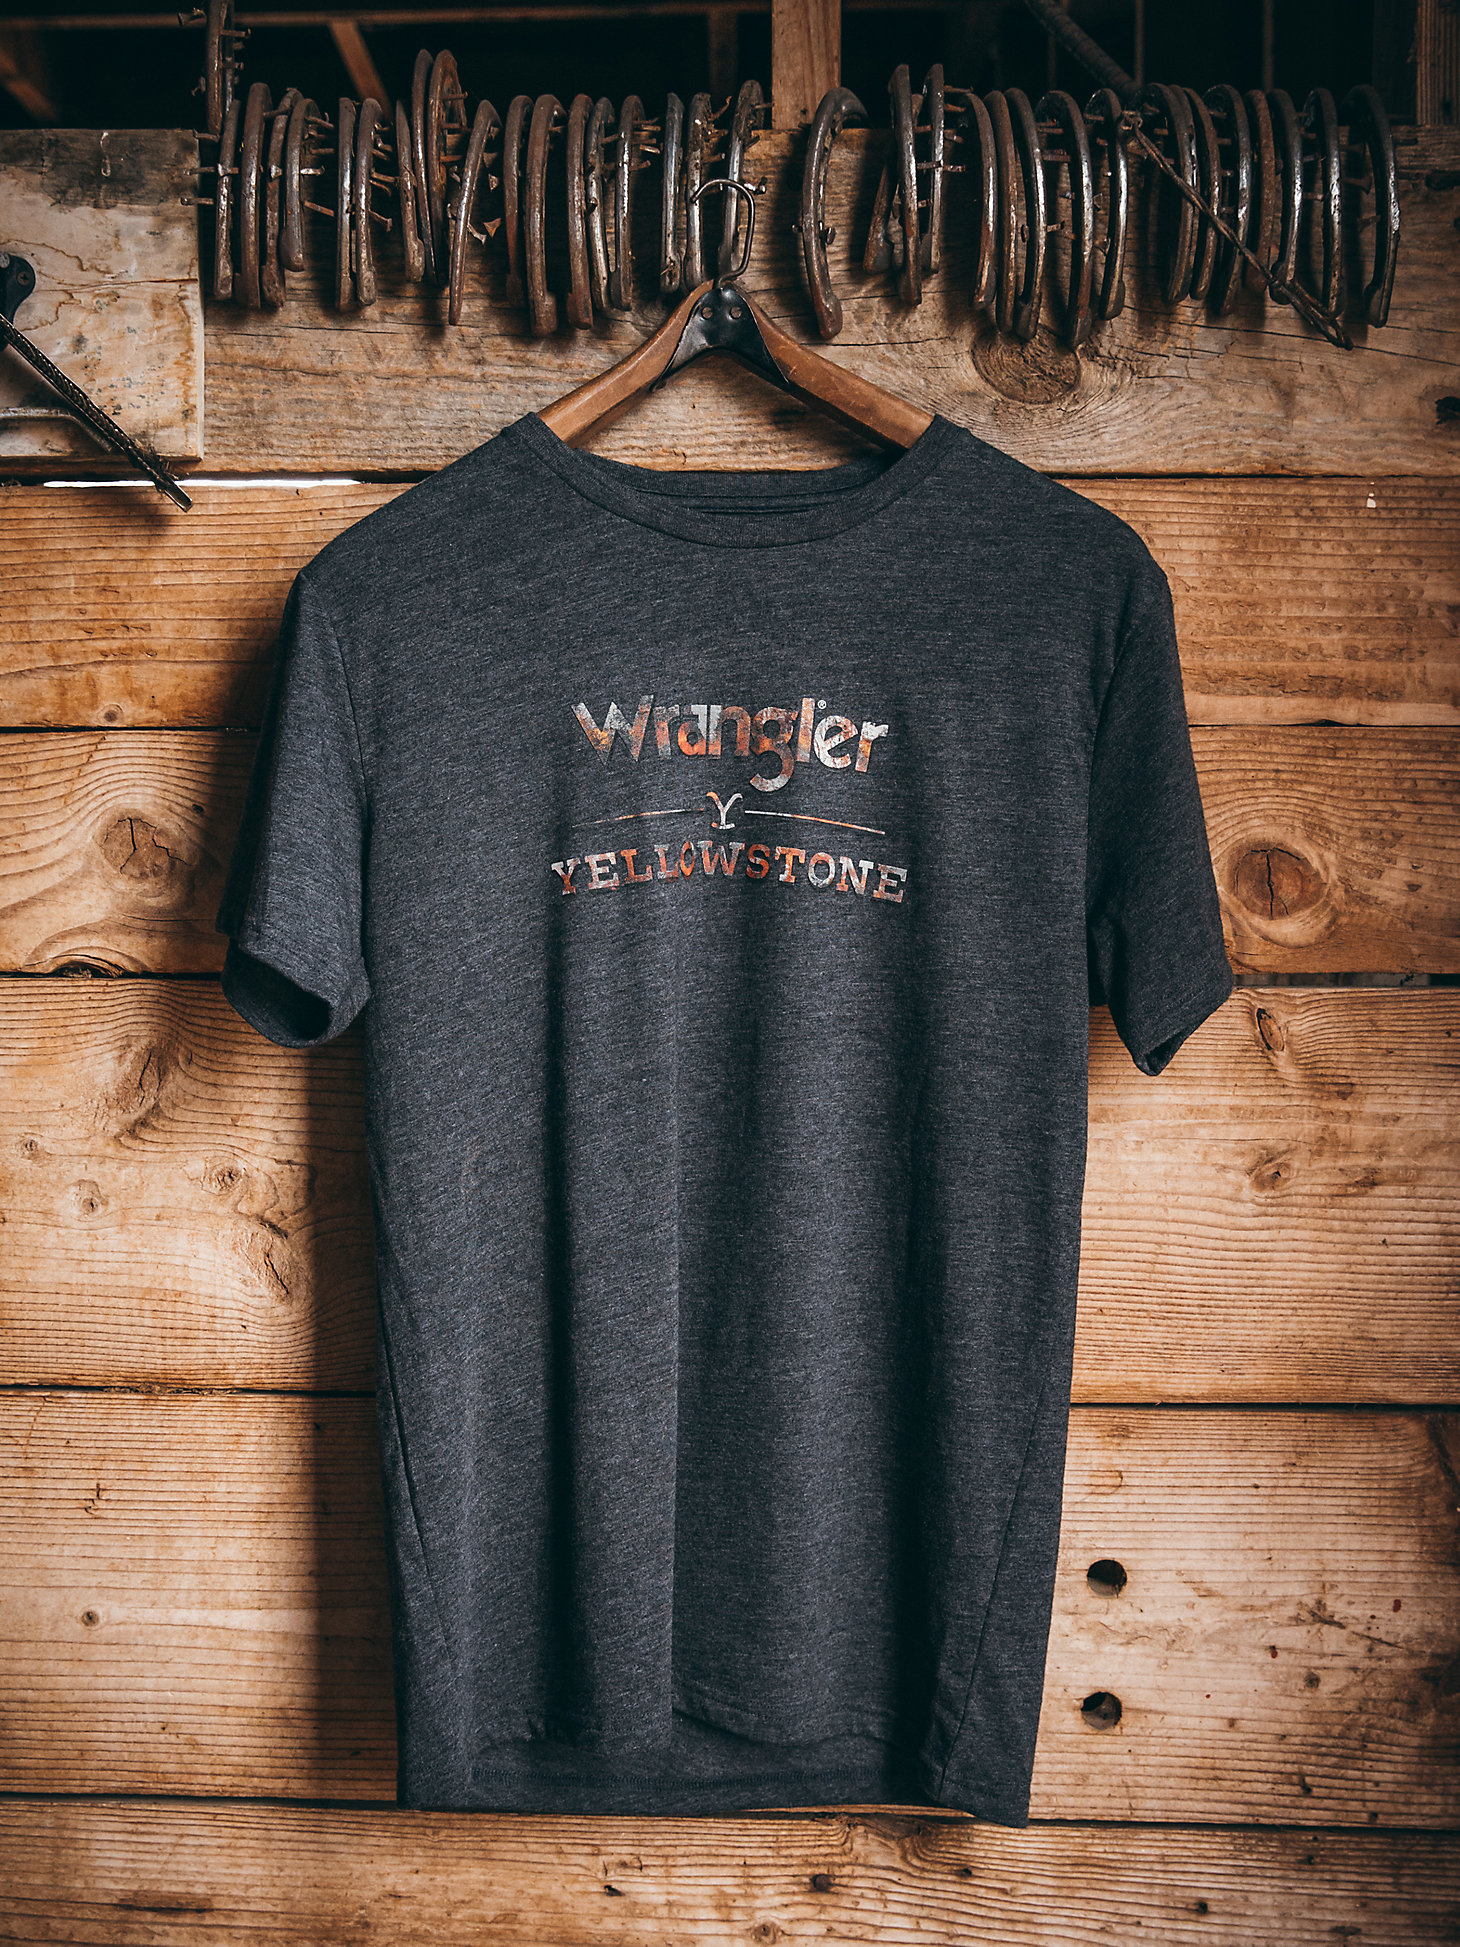 Wrangler x Yellowstone Men's Logo T-Shirt in Caviar Heather alternative view 1